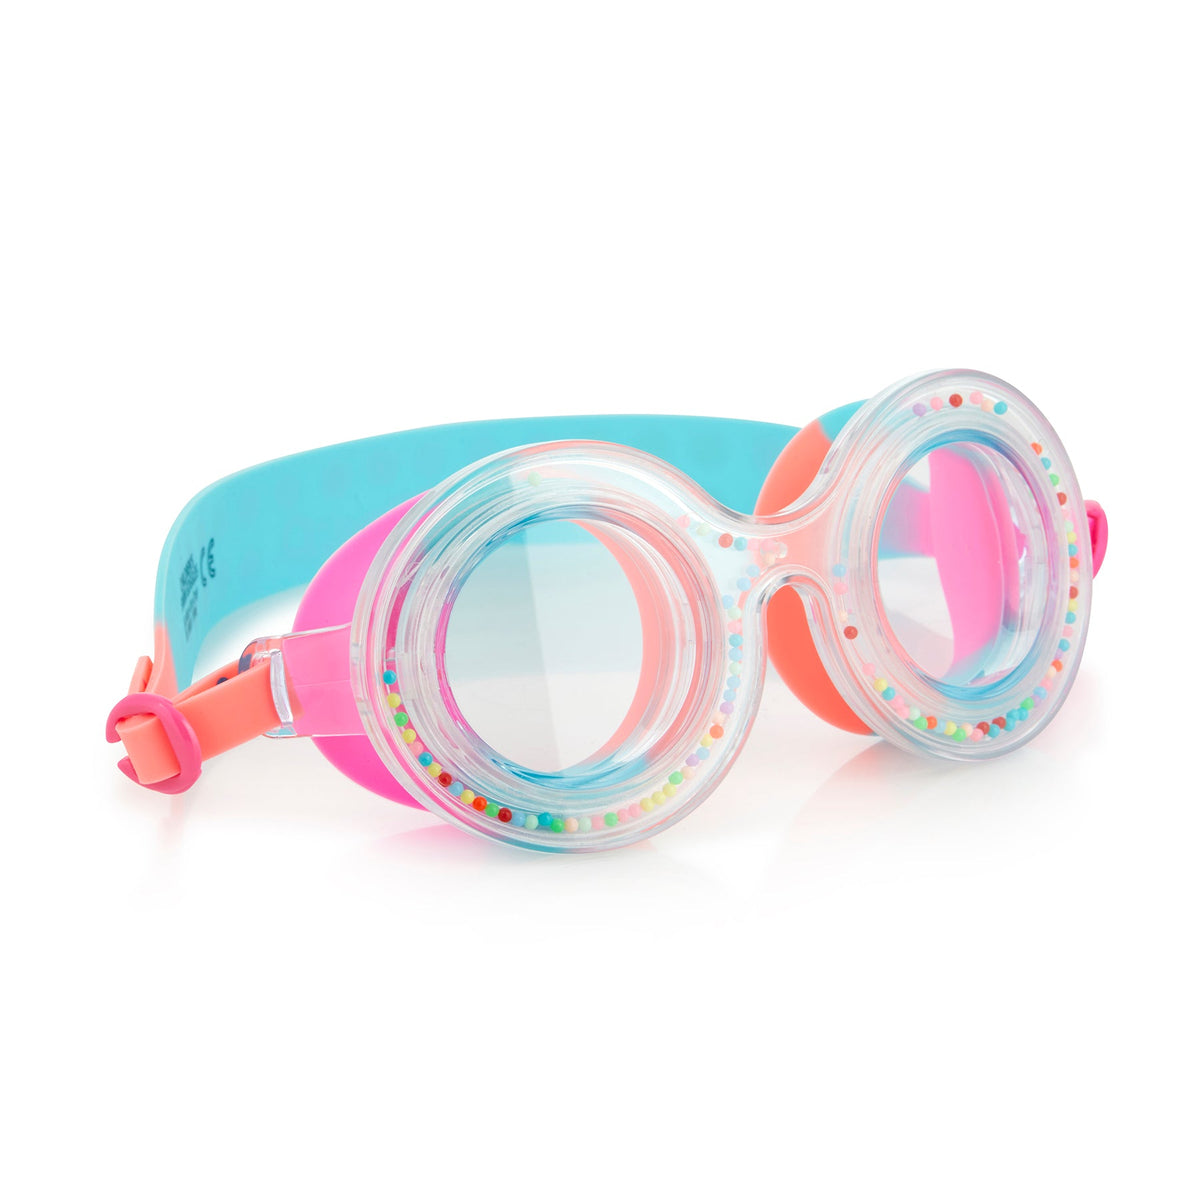 Bling20 Yummy Gummy Bubble-icious Swim Goggles